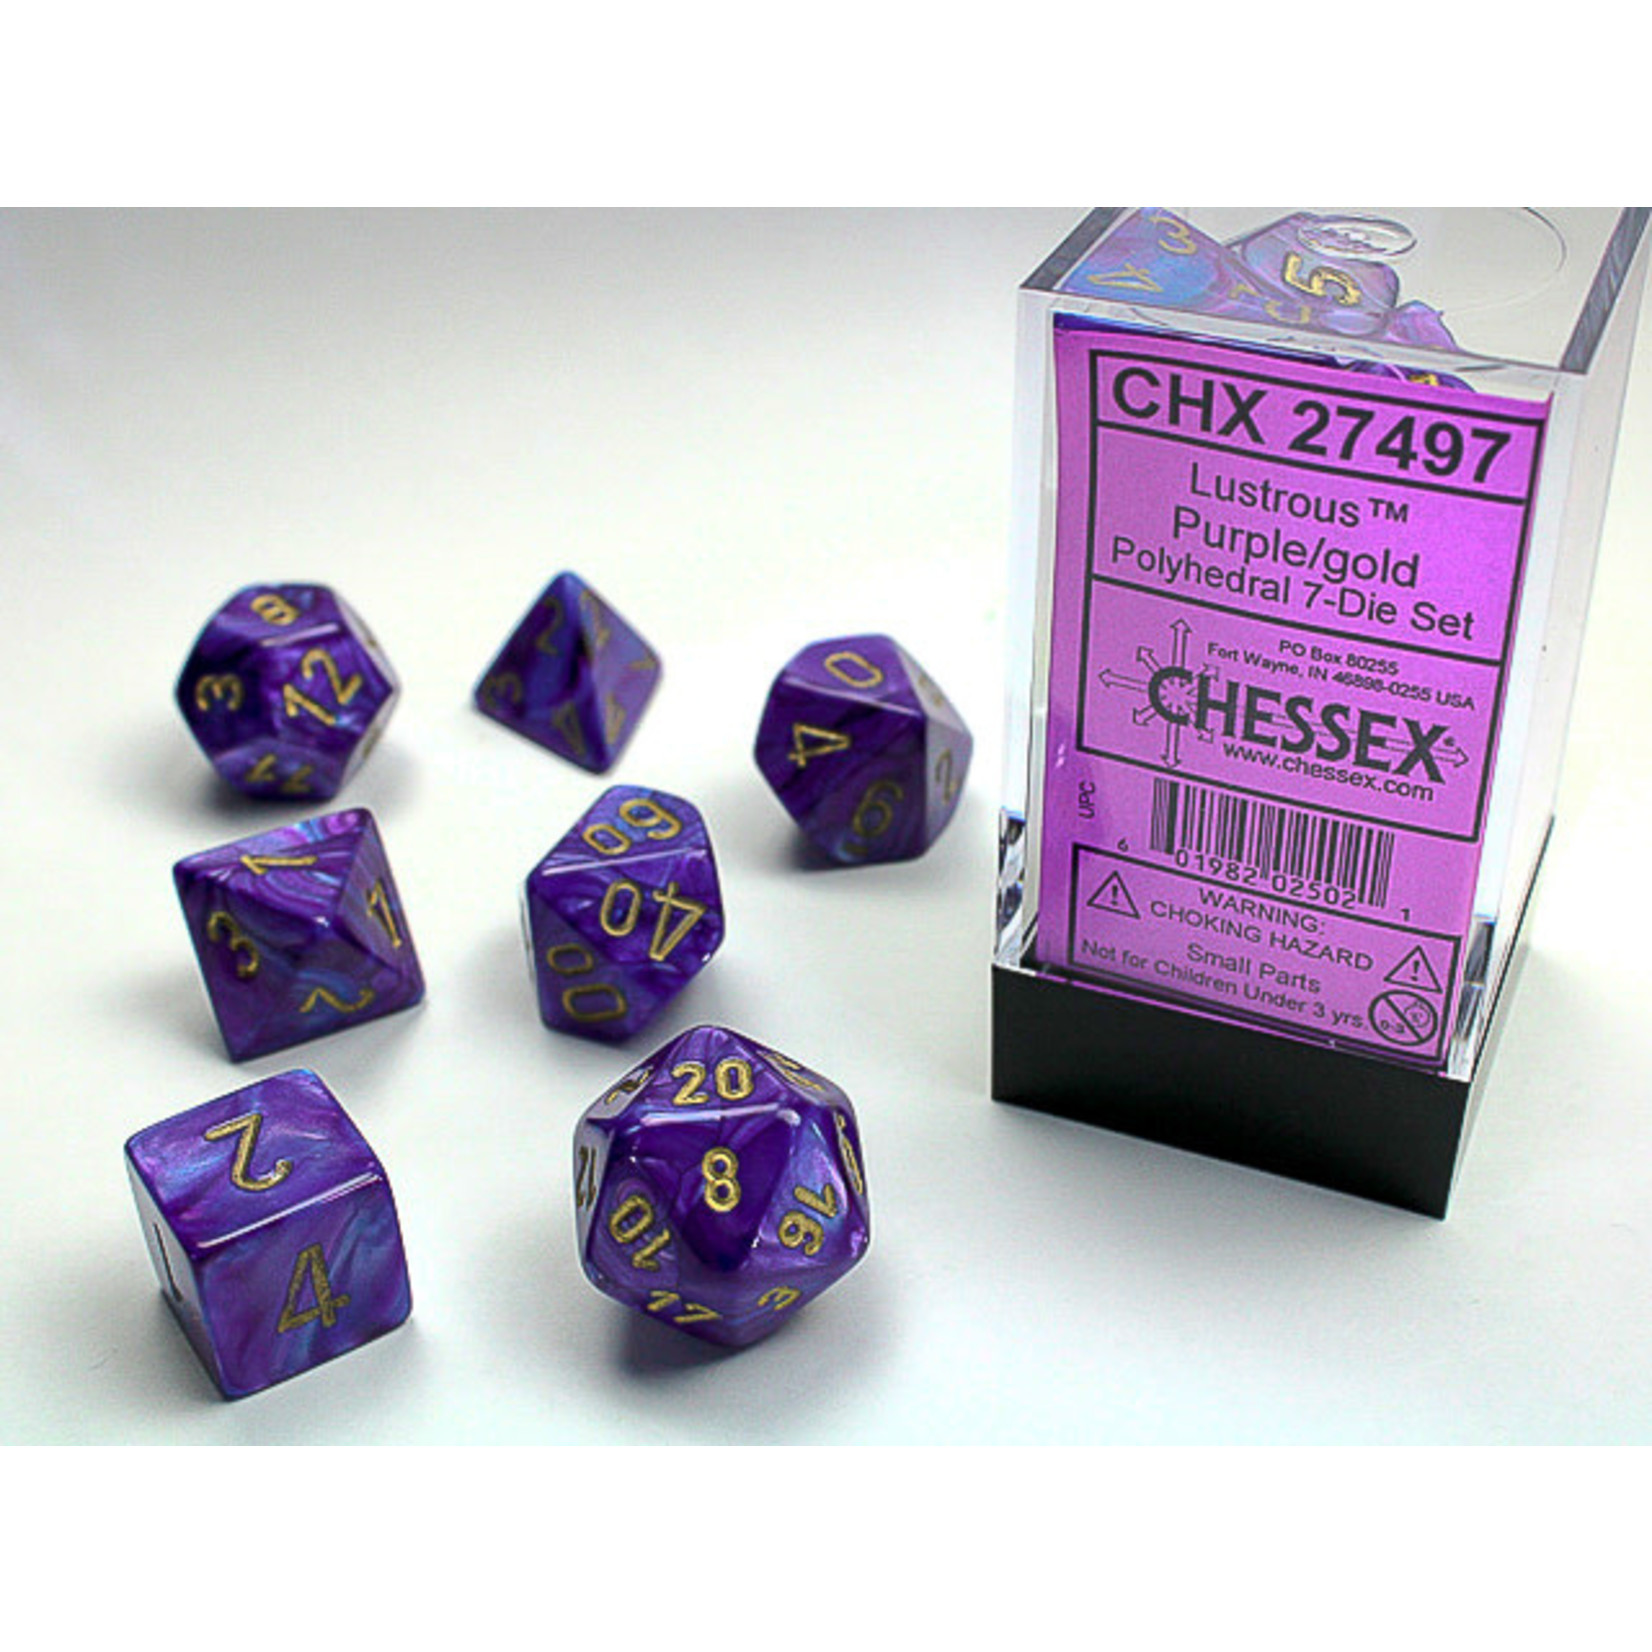 Chessex Dice RPG 27497 7pc Lustrous Purple/Gold